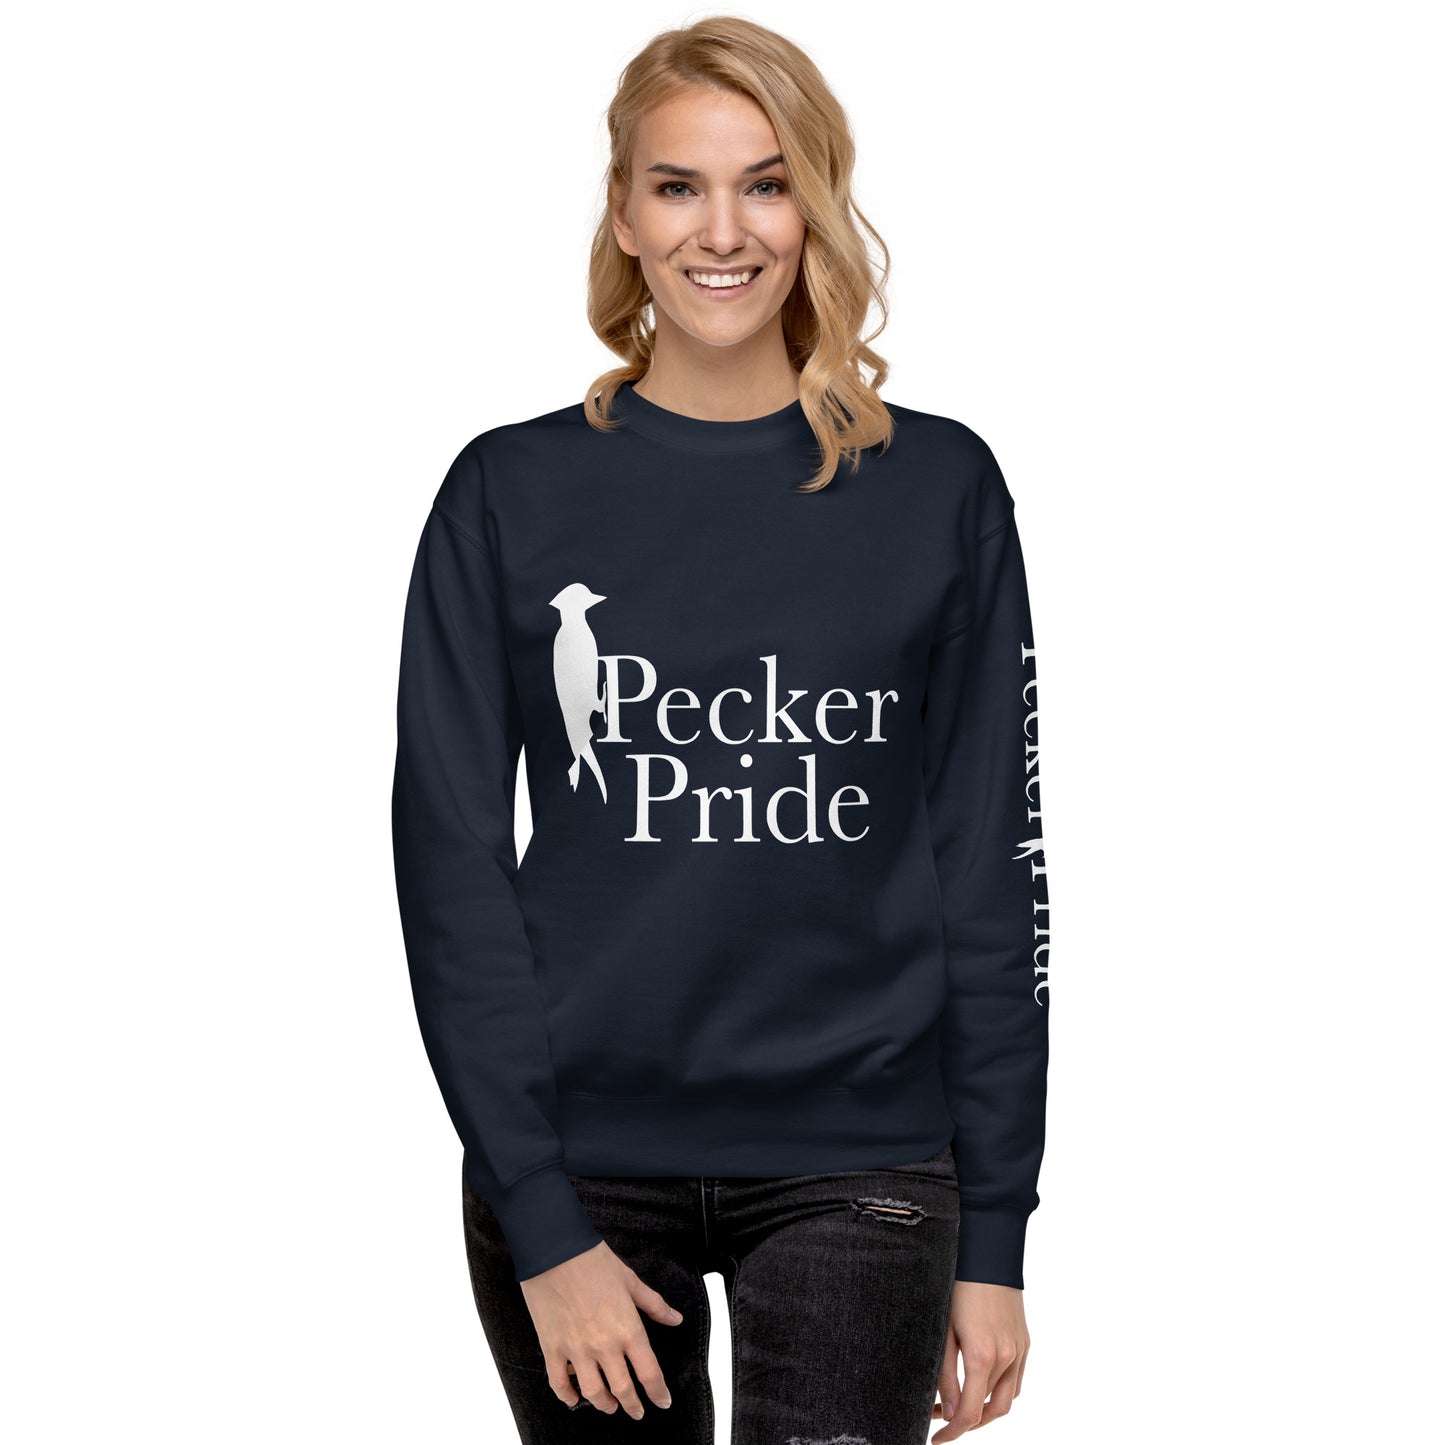 Pecker Pride Dark Premium Sweatshirt